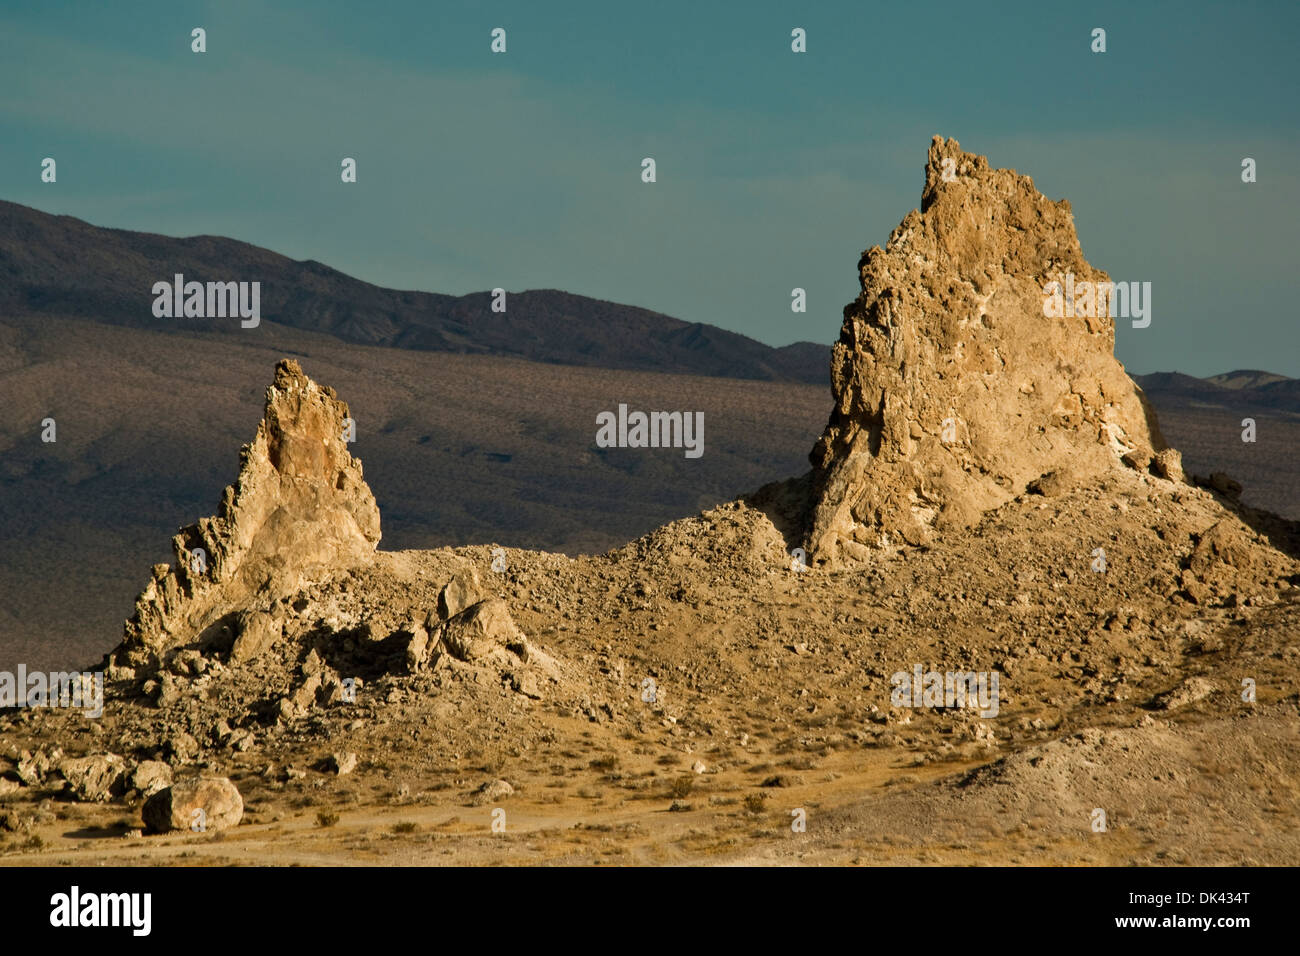 Tufa rock formations at the Trona Pinnacles, California Stock Photo